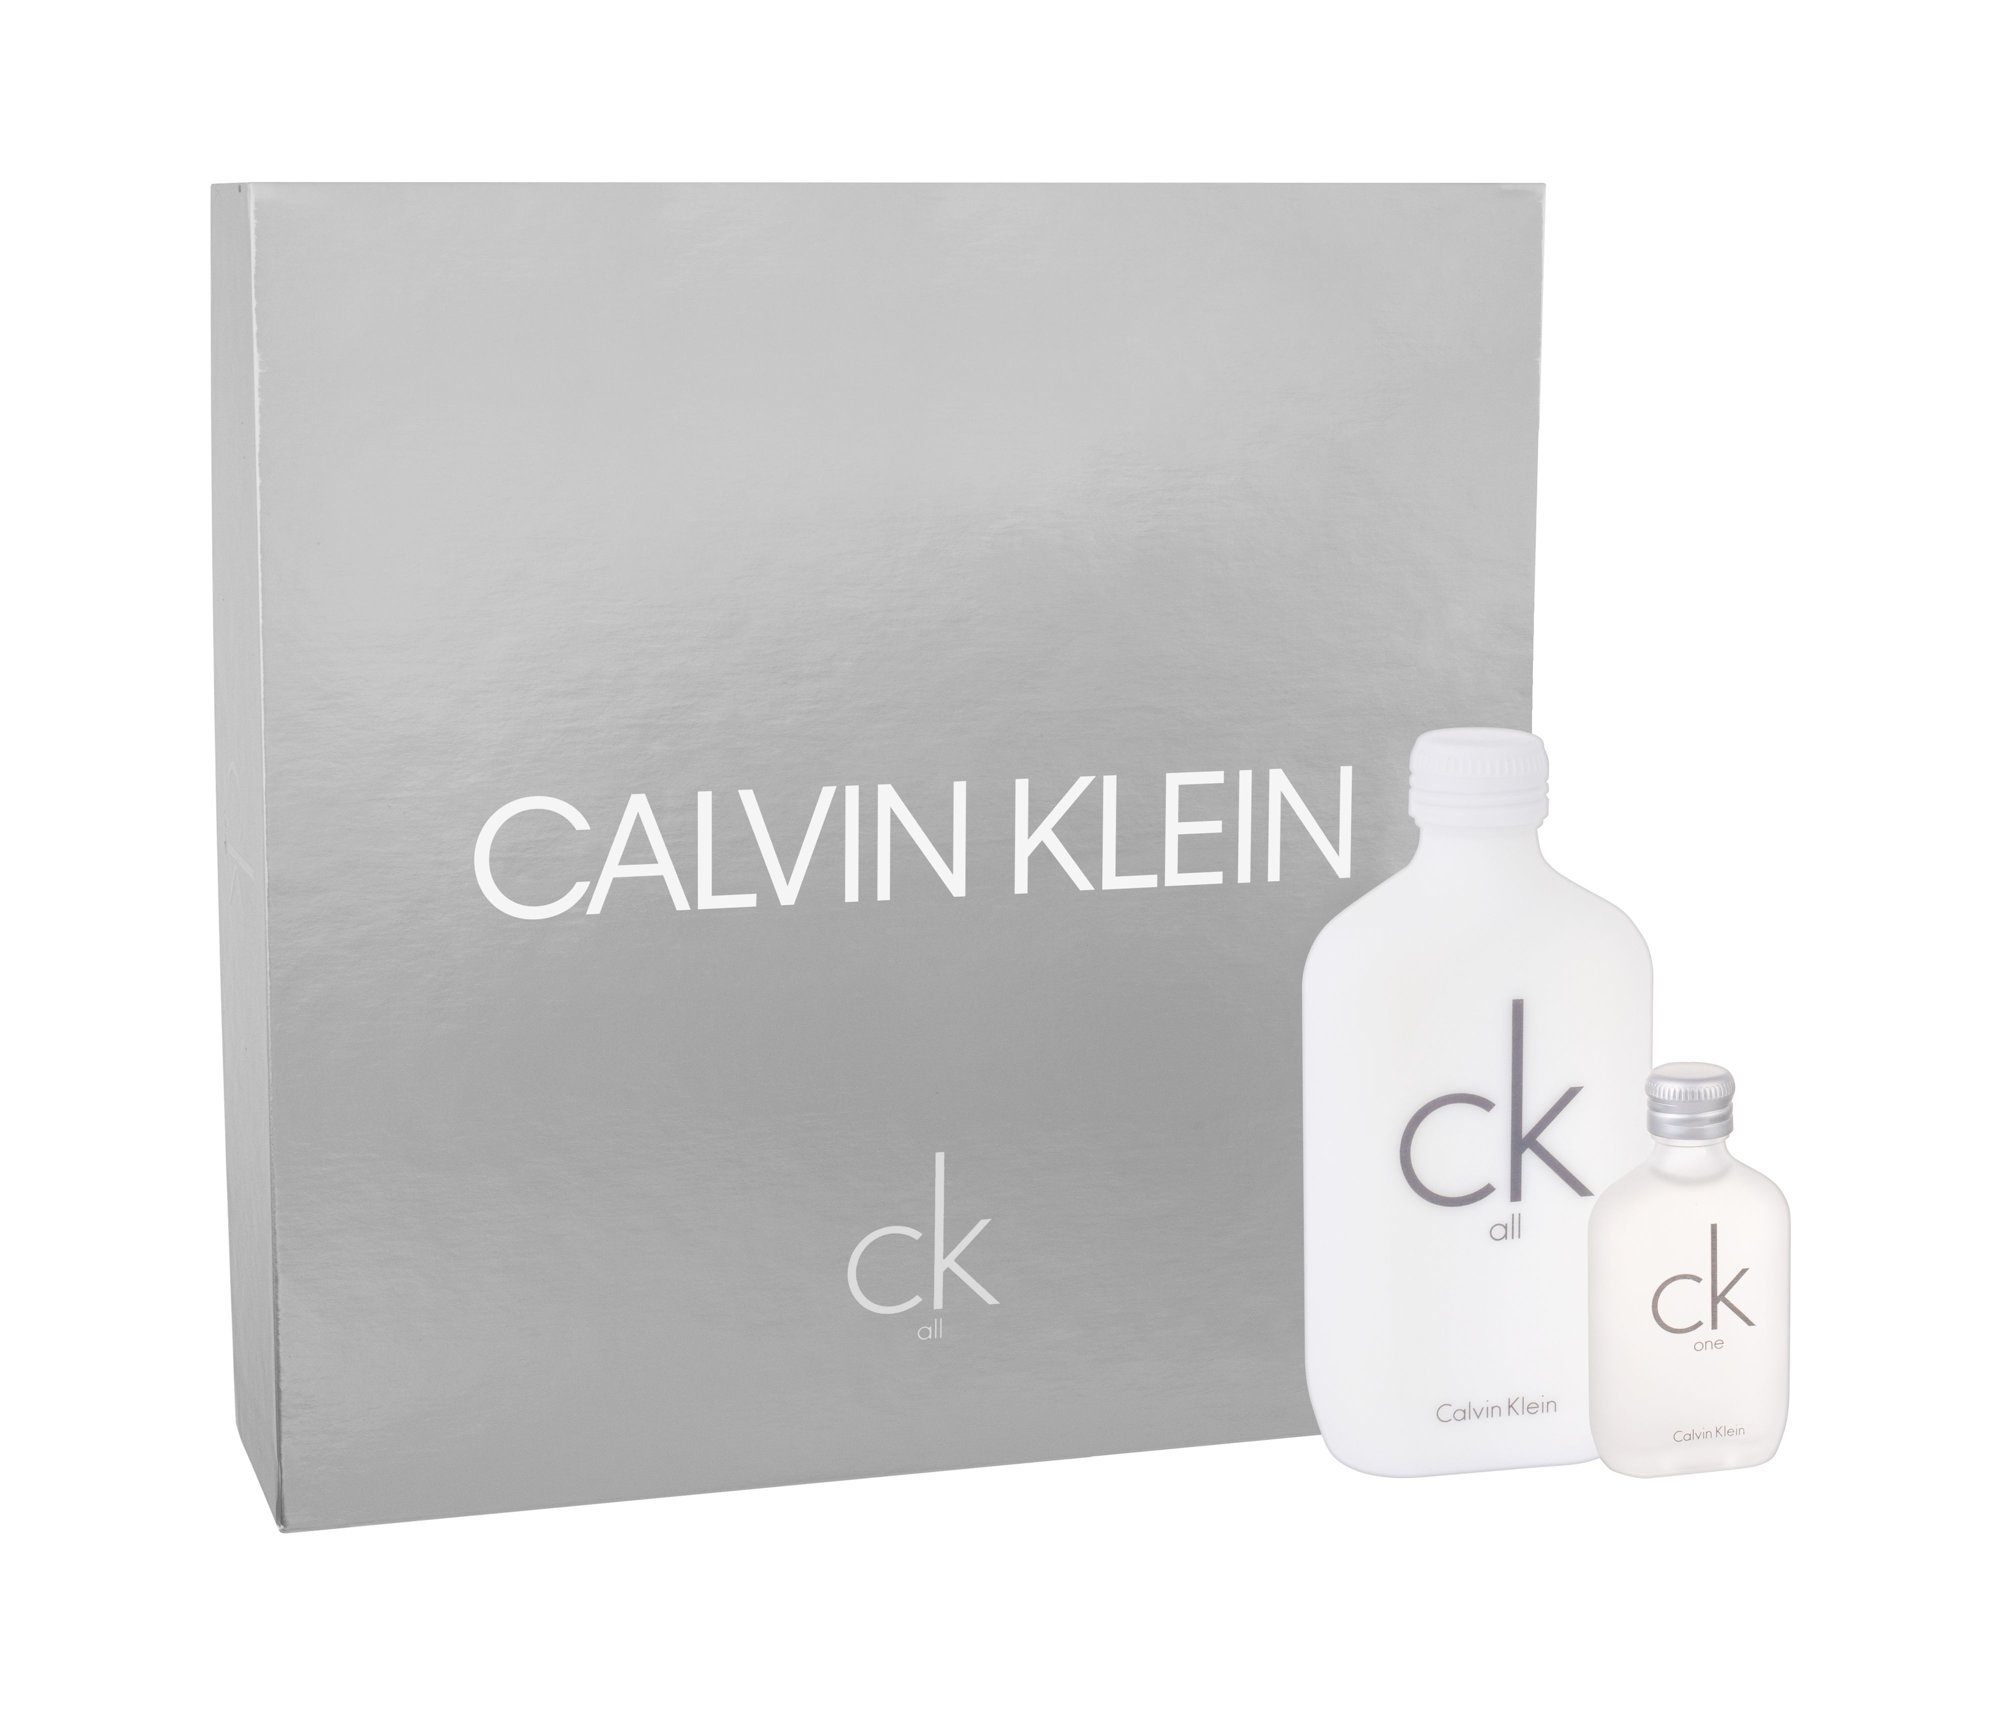 Calvin Klein CK All 100ml Edt 100 ml + Edt CK One 15 ml Kvepalai Unisex EDT Rinkinys